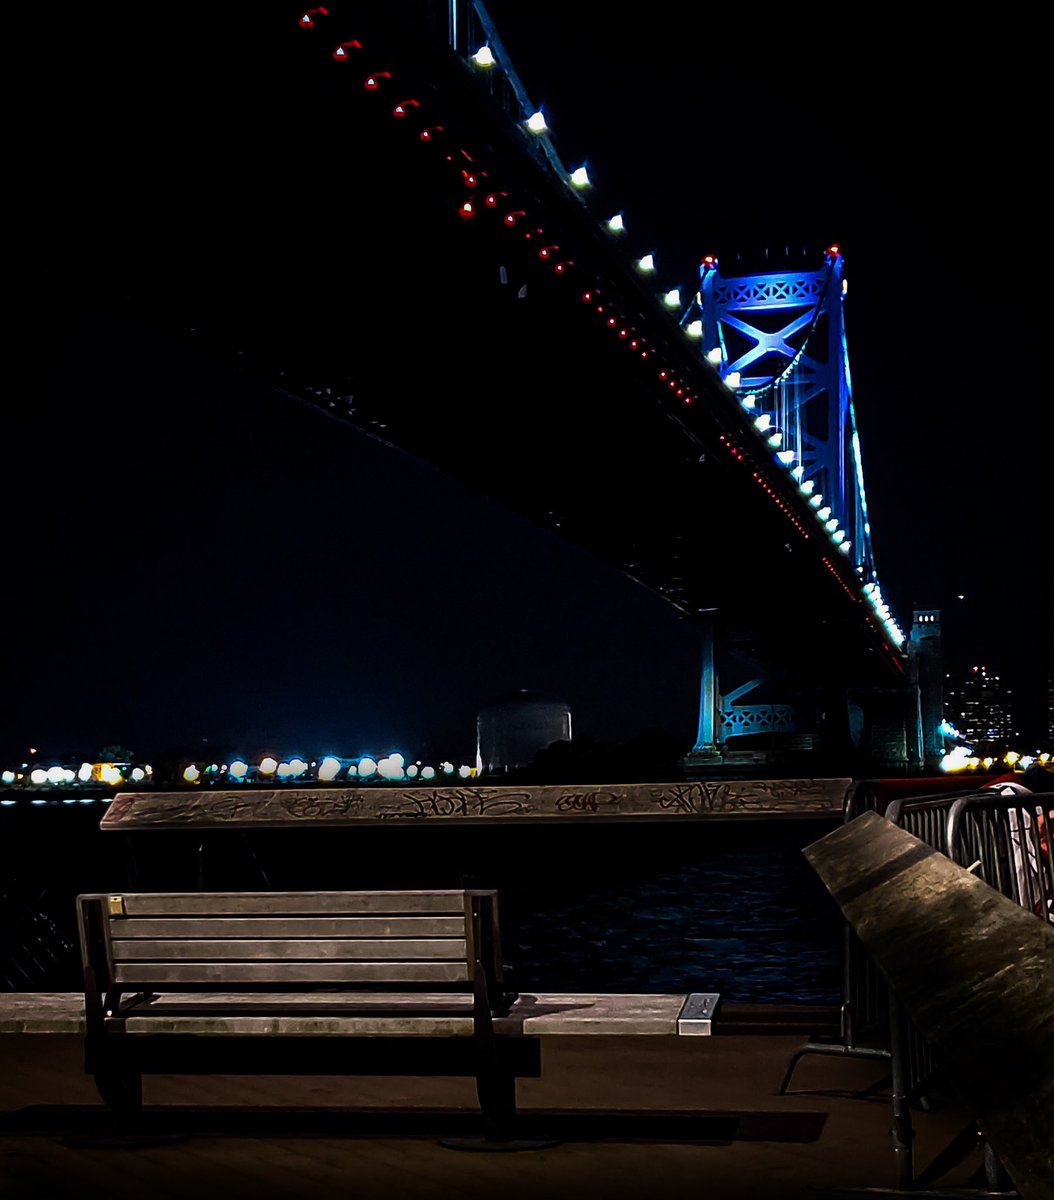 Late nights on the pier #bridgesofphilly #phillyatnight #PHLphoto #urbanphotography #cityofphiladelphia #benjaminfranklinbridge #cityphotography #latenightphillywalks #moodoftheday